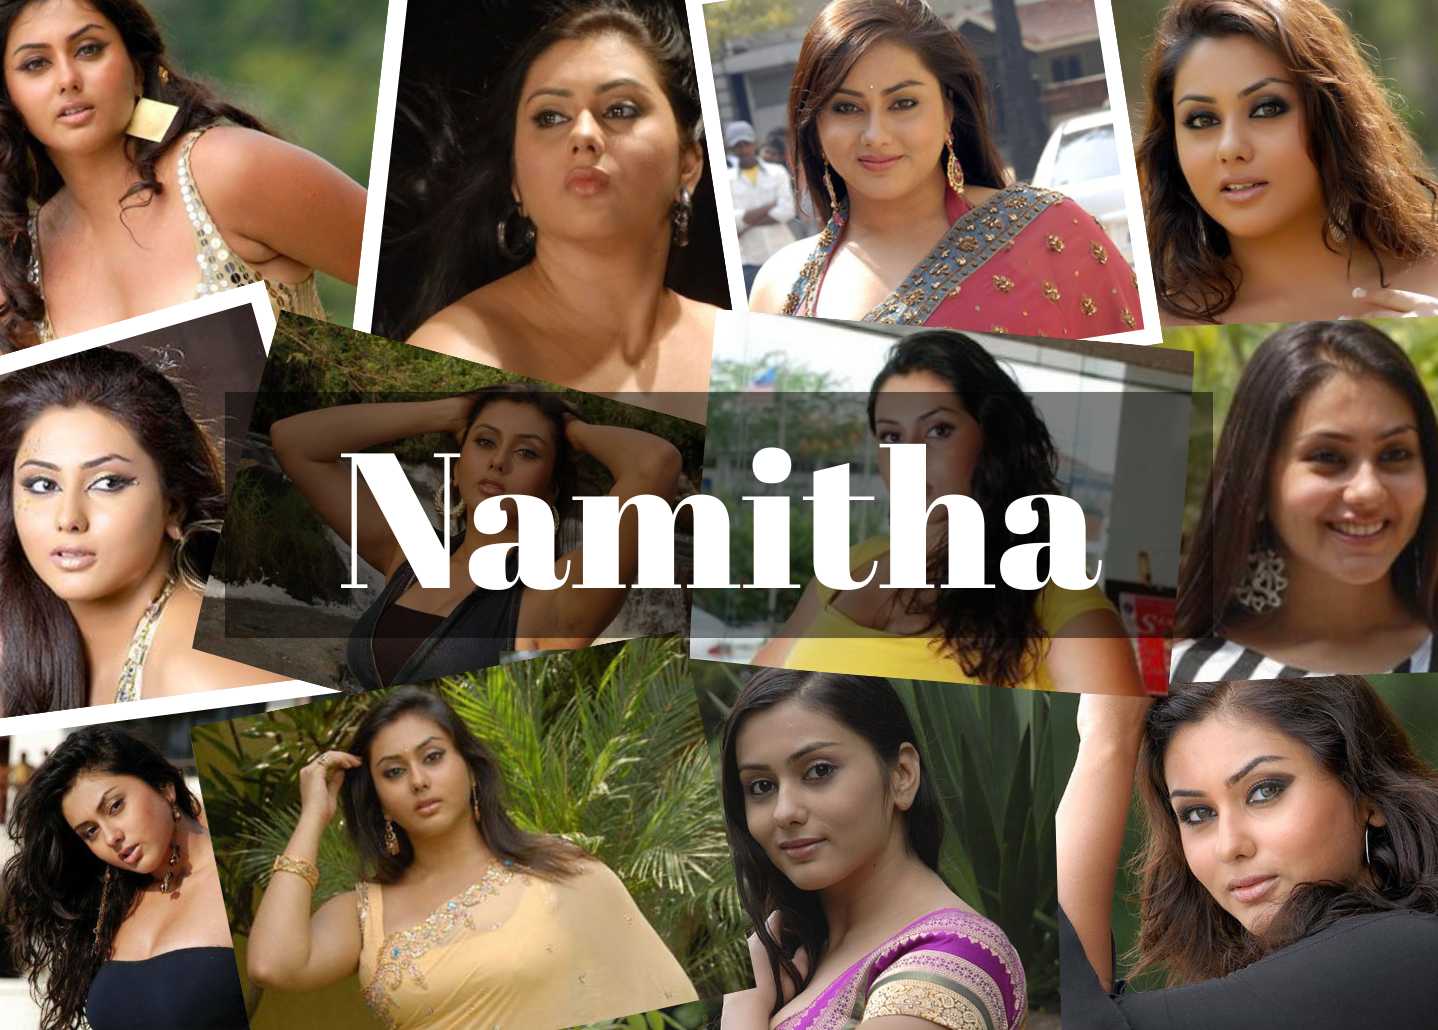 Namitha Xnxx Videos - Namitha Biography Net Worth Facts Controversy